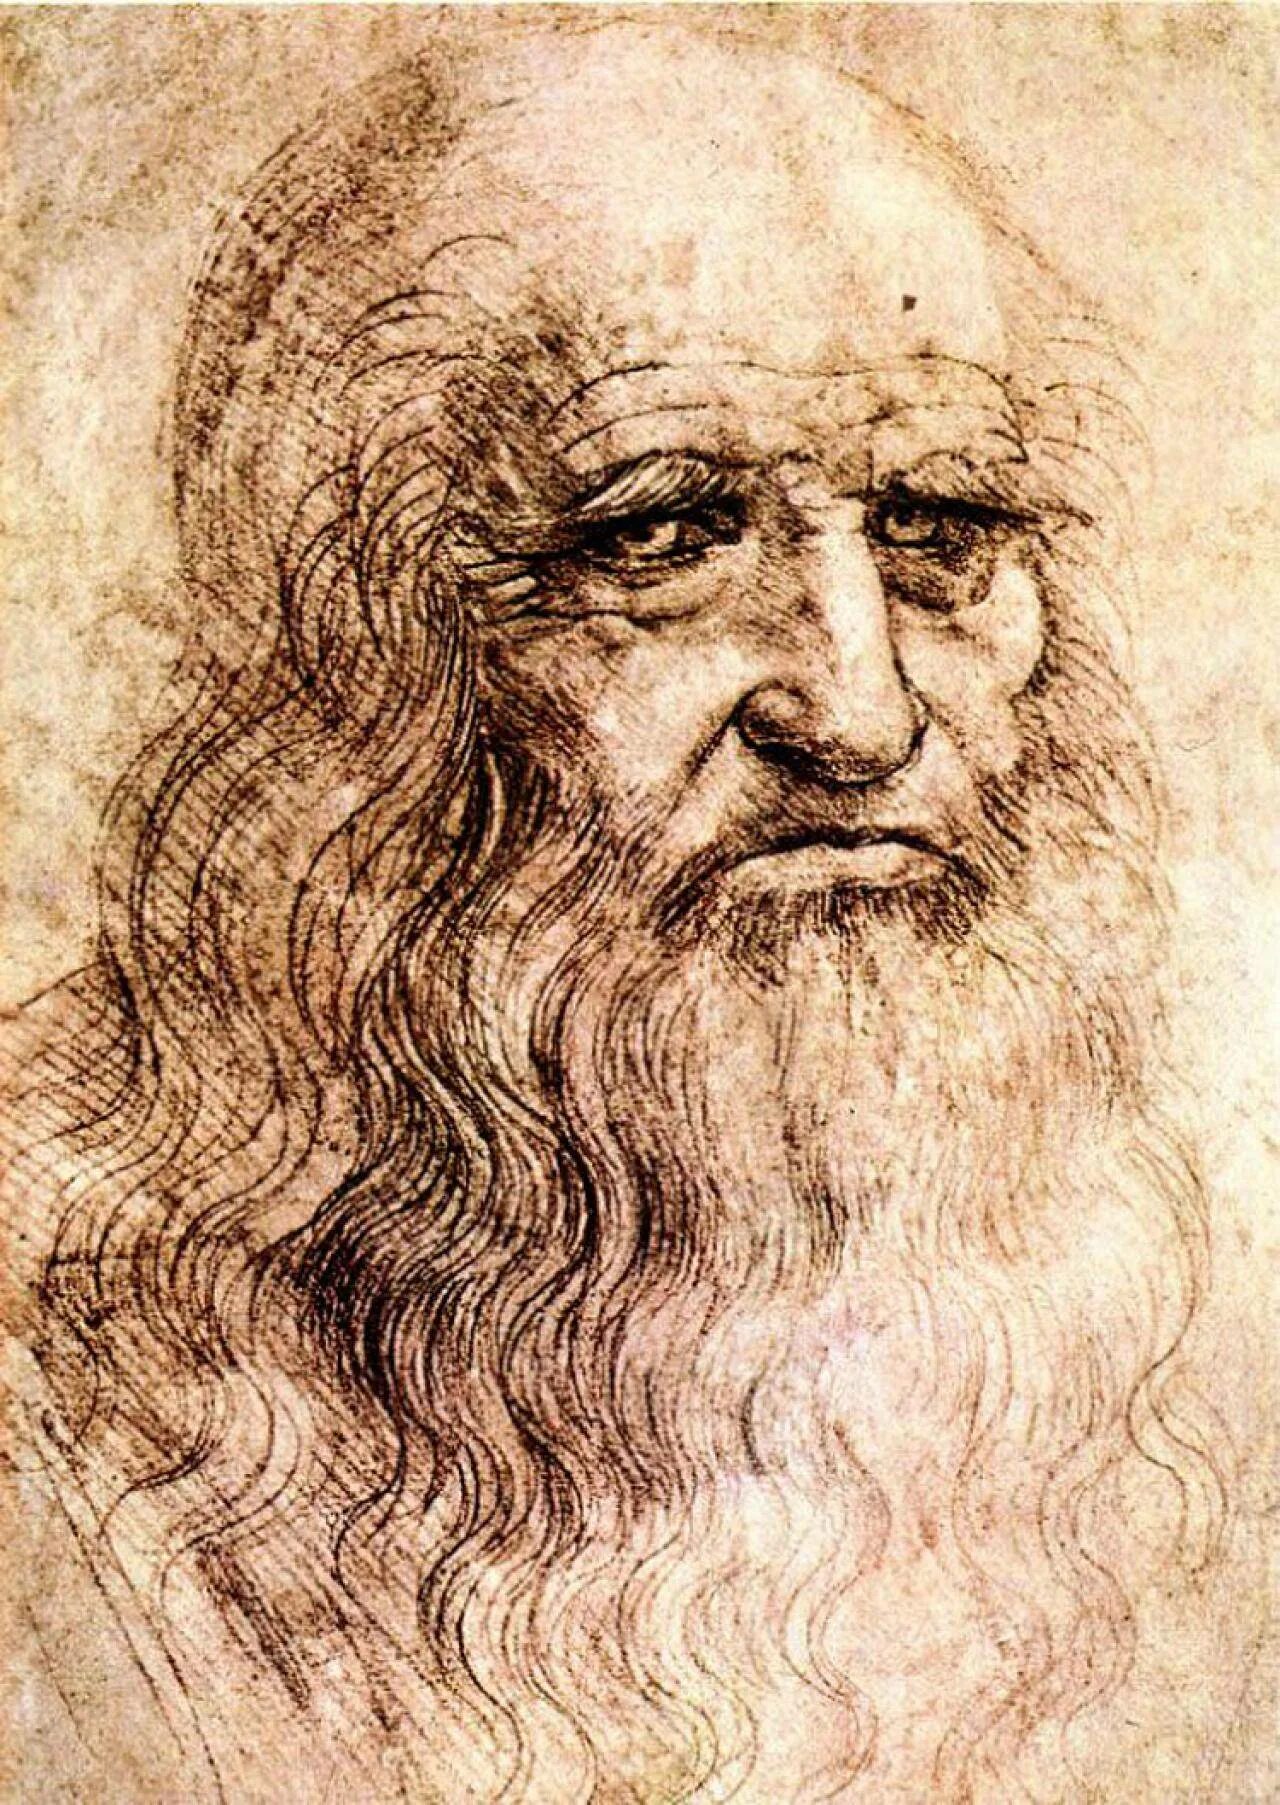 Леонардо да Винчи автопортрет 1512. Леонардоида Винчи автопортрет. Леонардо да Винчи портрет. Леонардо да Винчи Автопорт. Гении возрождения